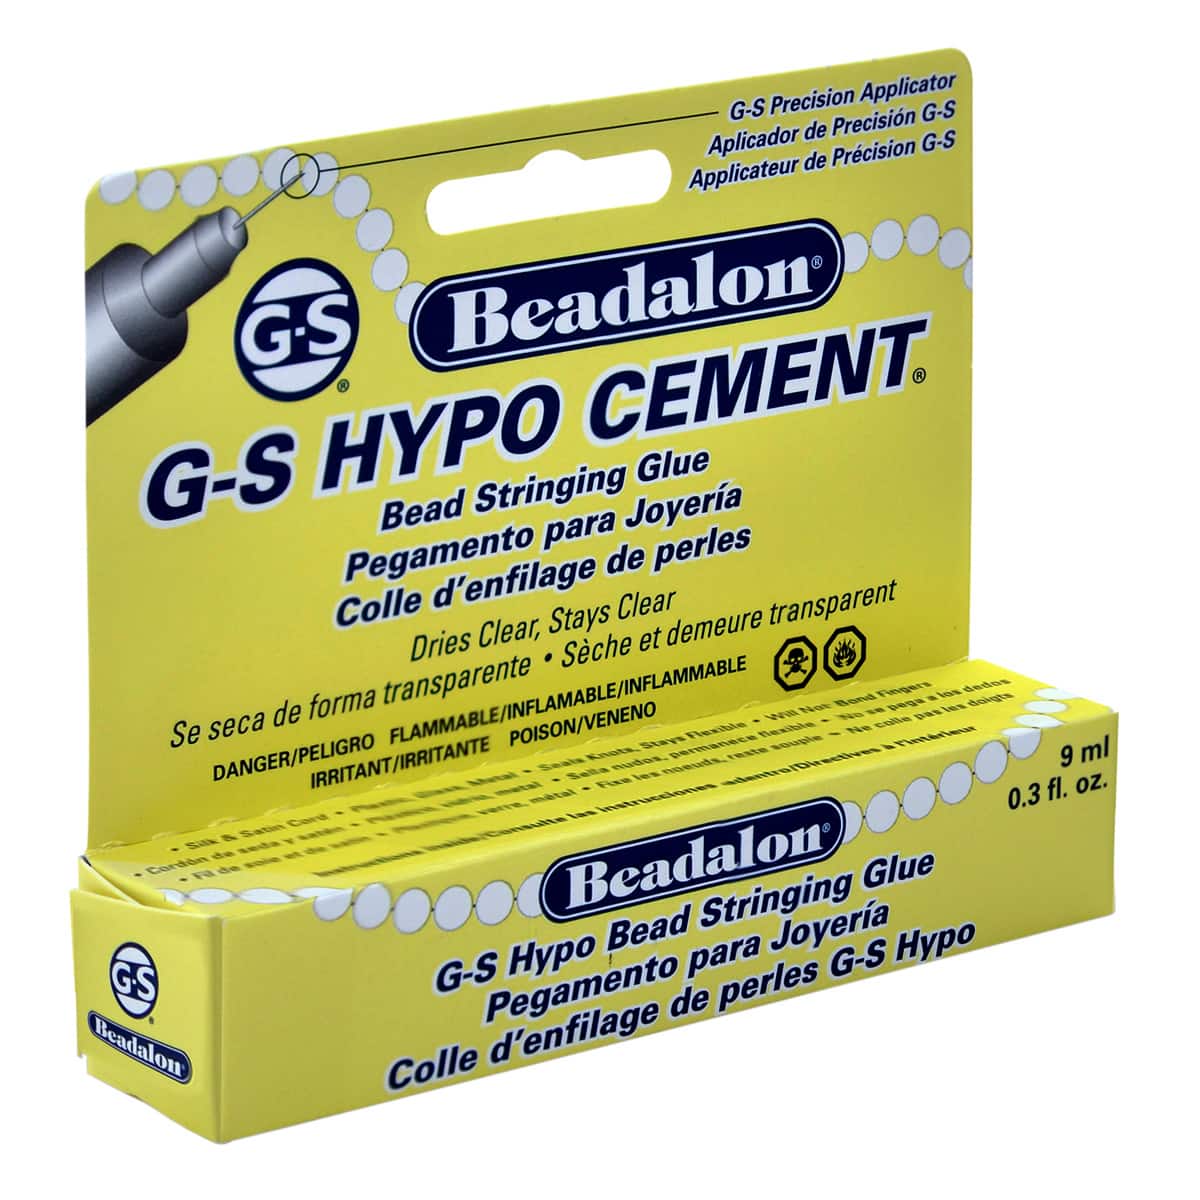 Beadalon G-S Hypo Cement®